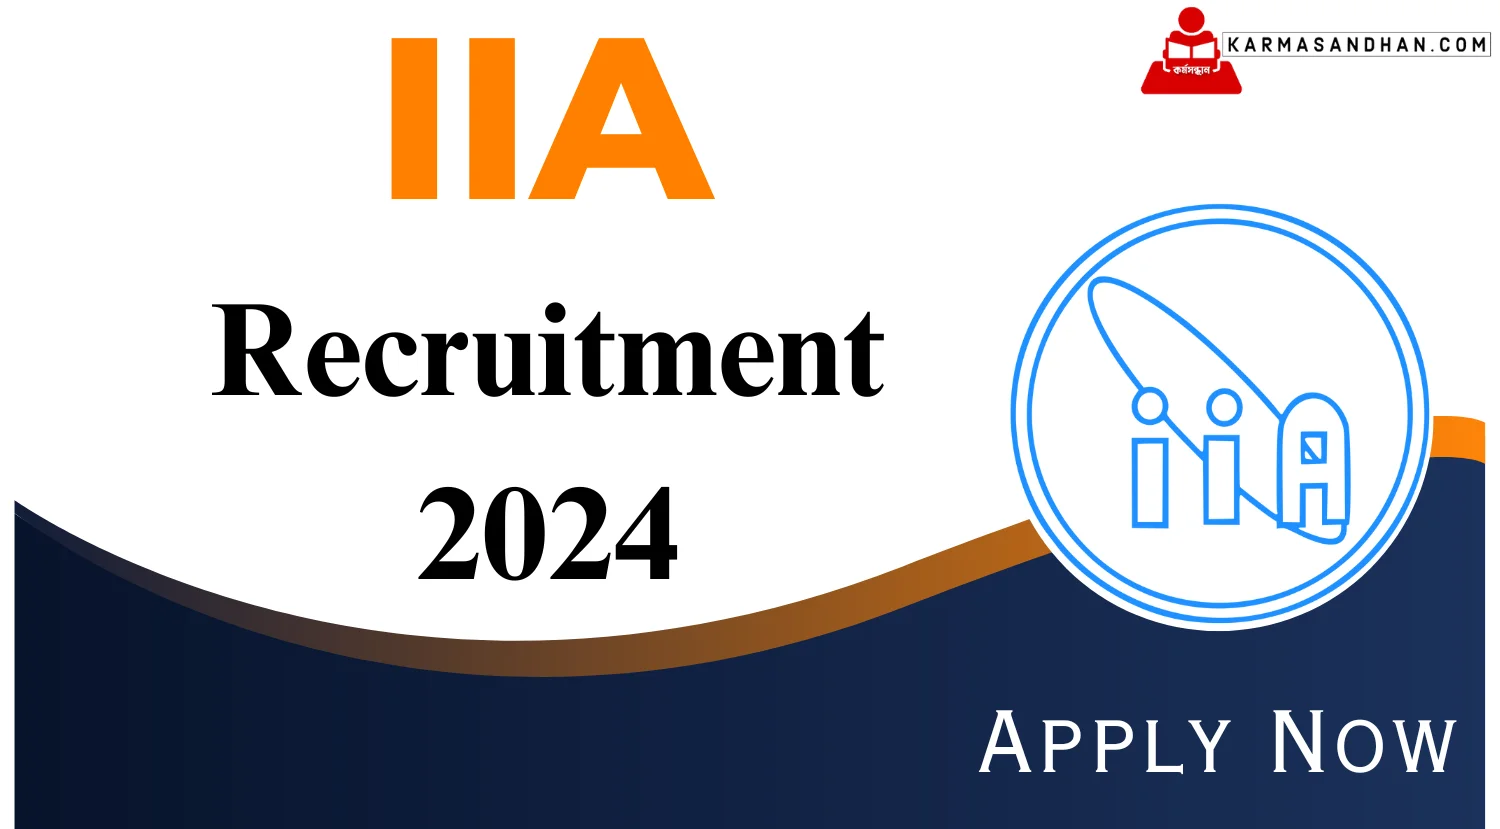 IIA Research Trainee Recruitment 2024